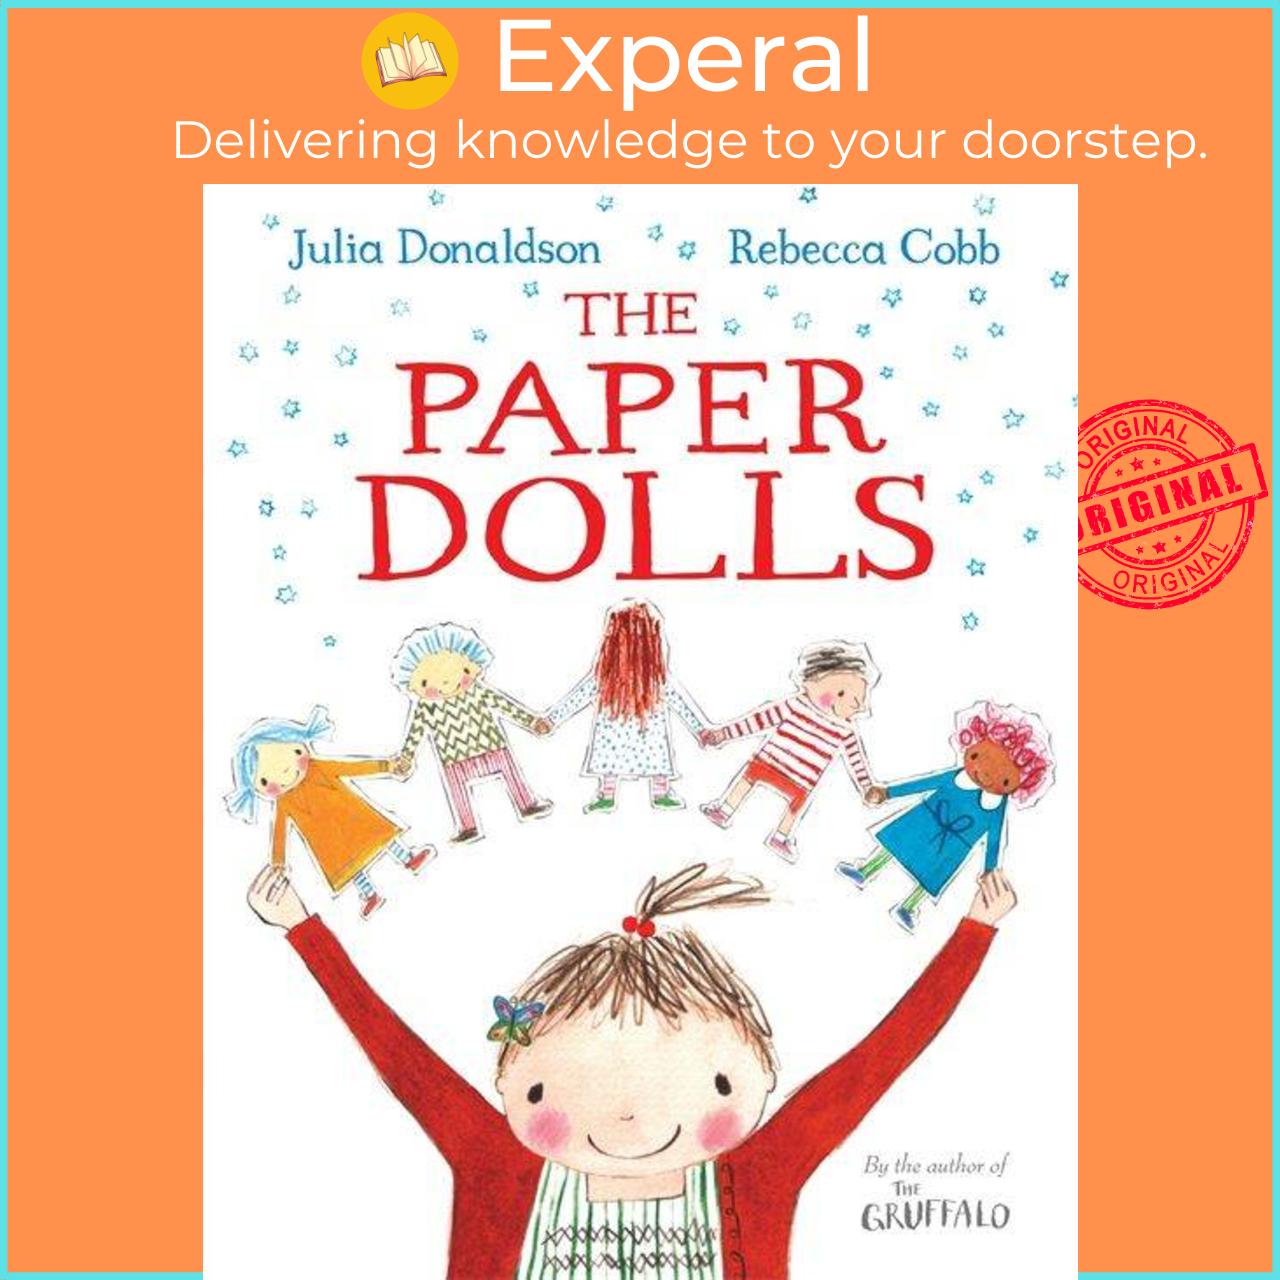 Sách - The Paper Dolls by Julia Donaldson (UK edition, paperback)